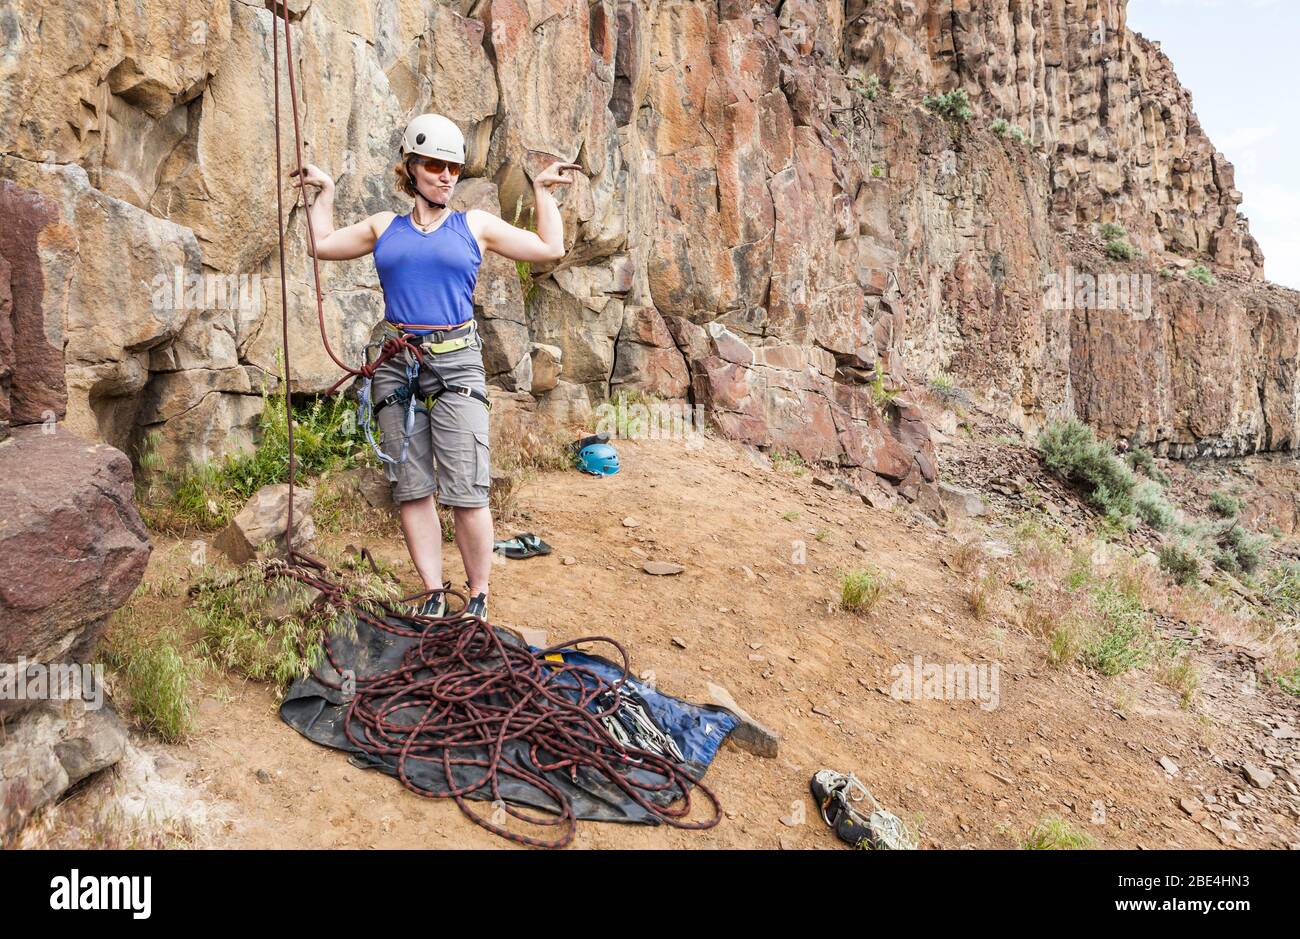 A mide 40's woman posing before starting a rock climb in Eastern Washington. 'The Gun Show'. Stock Photo